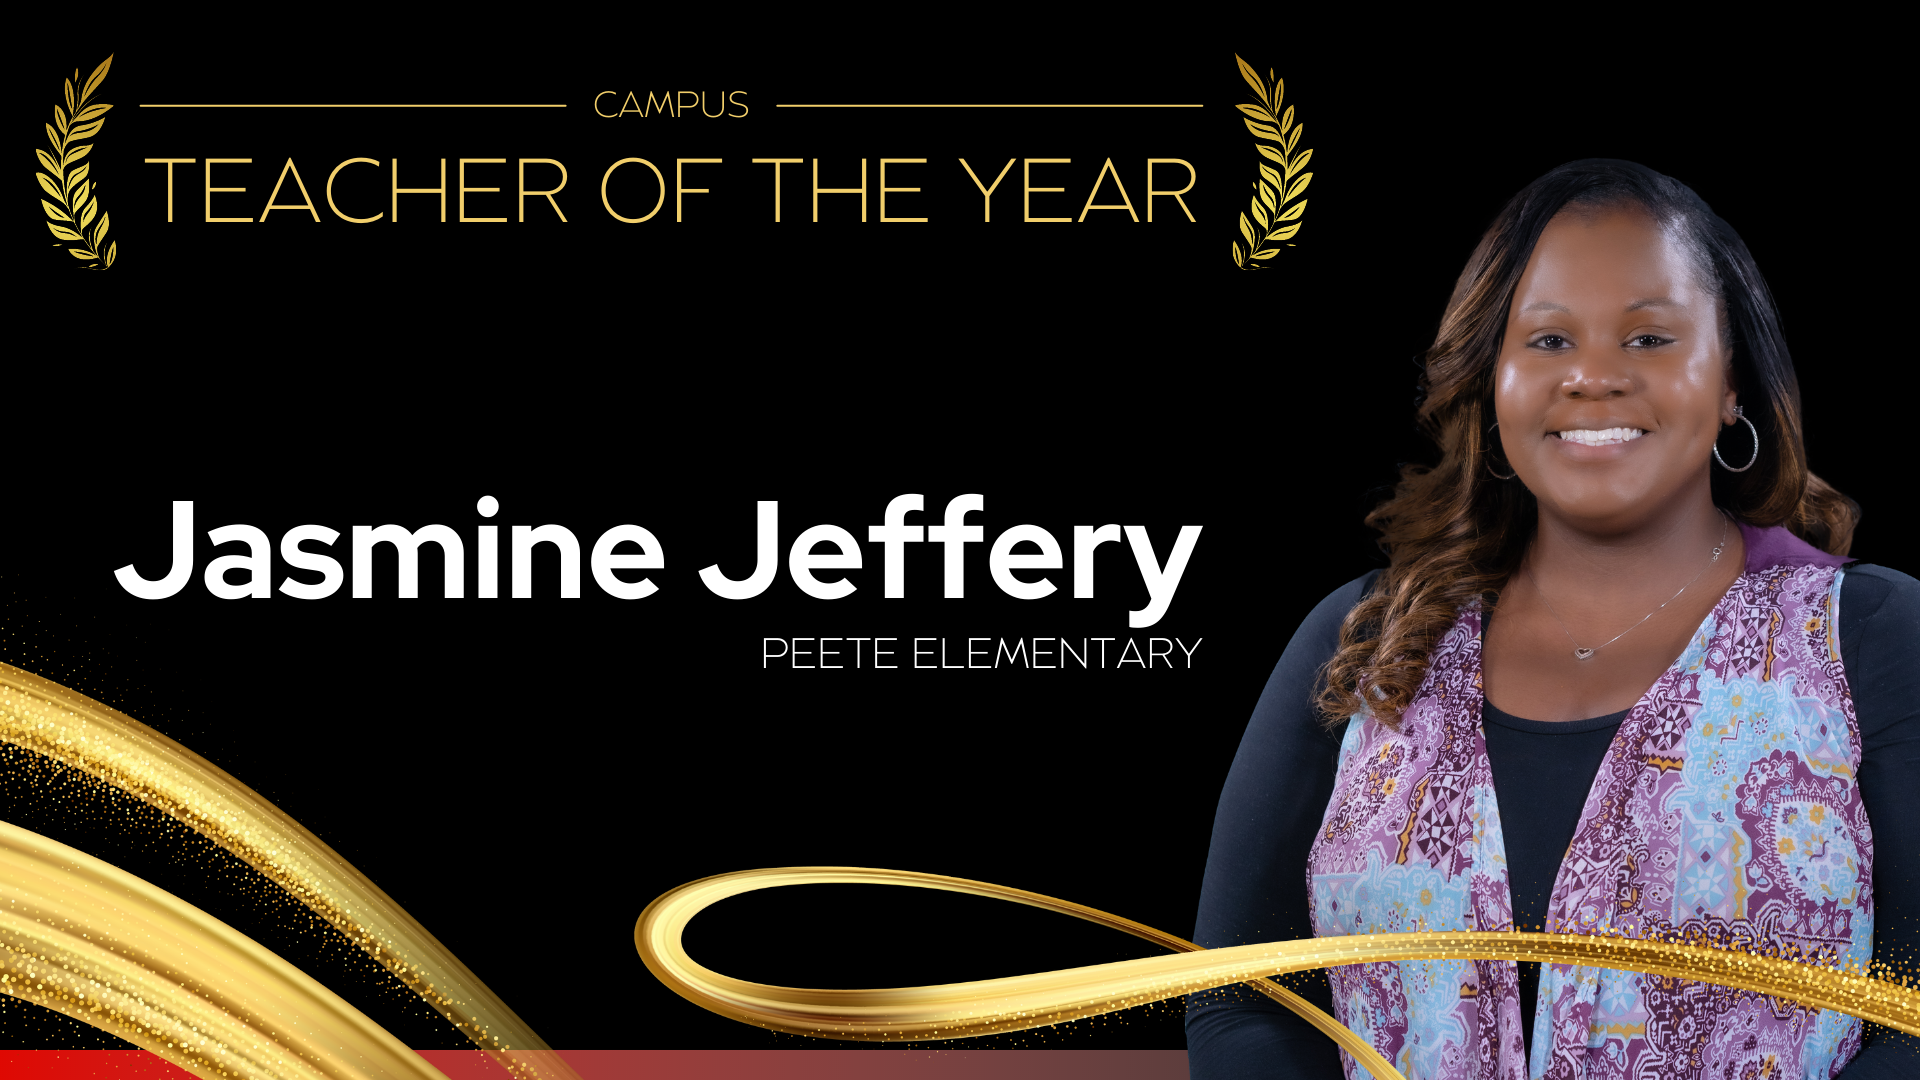 Campus Teacher of the Year W. A. Peete Elementary School - Jasmine Jeffery